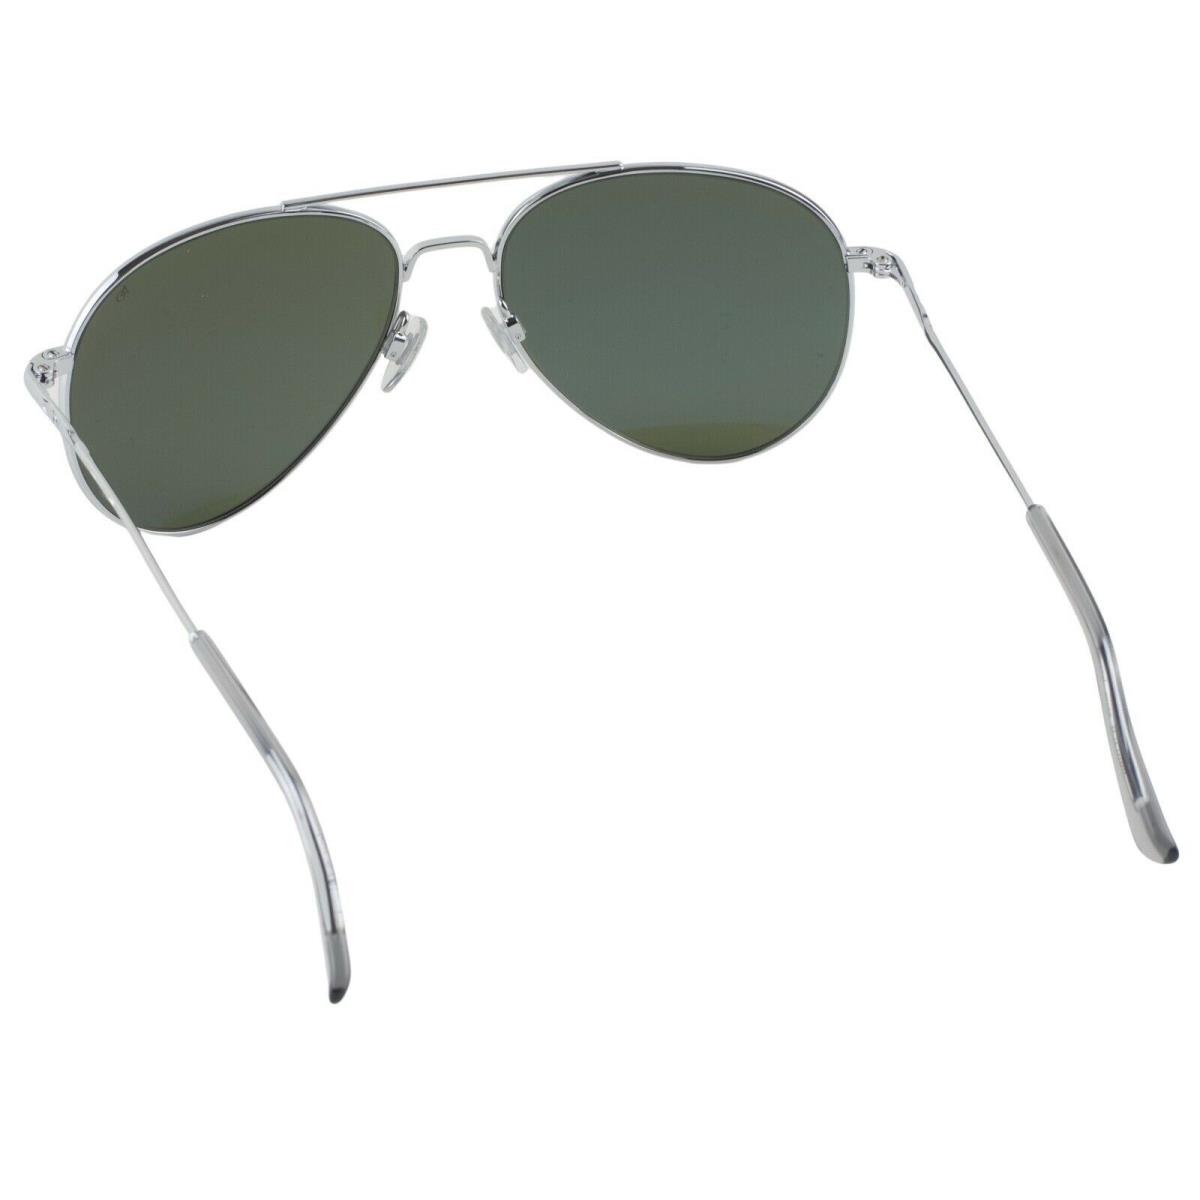 American Optical sunglasses  - Silver Frame, Gray Lens 1